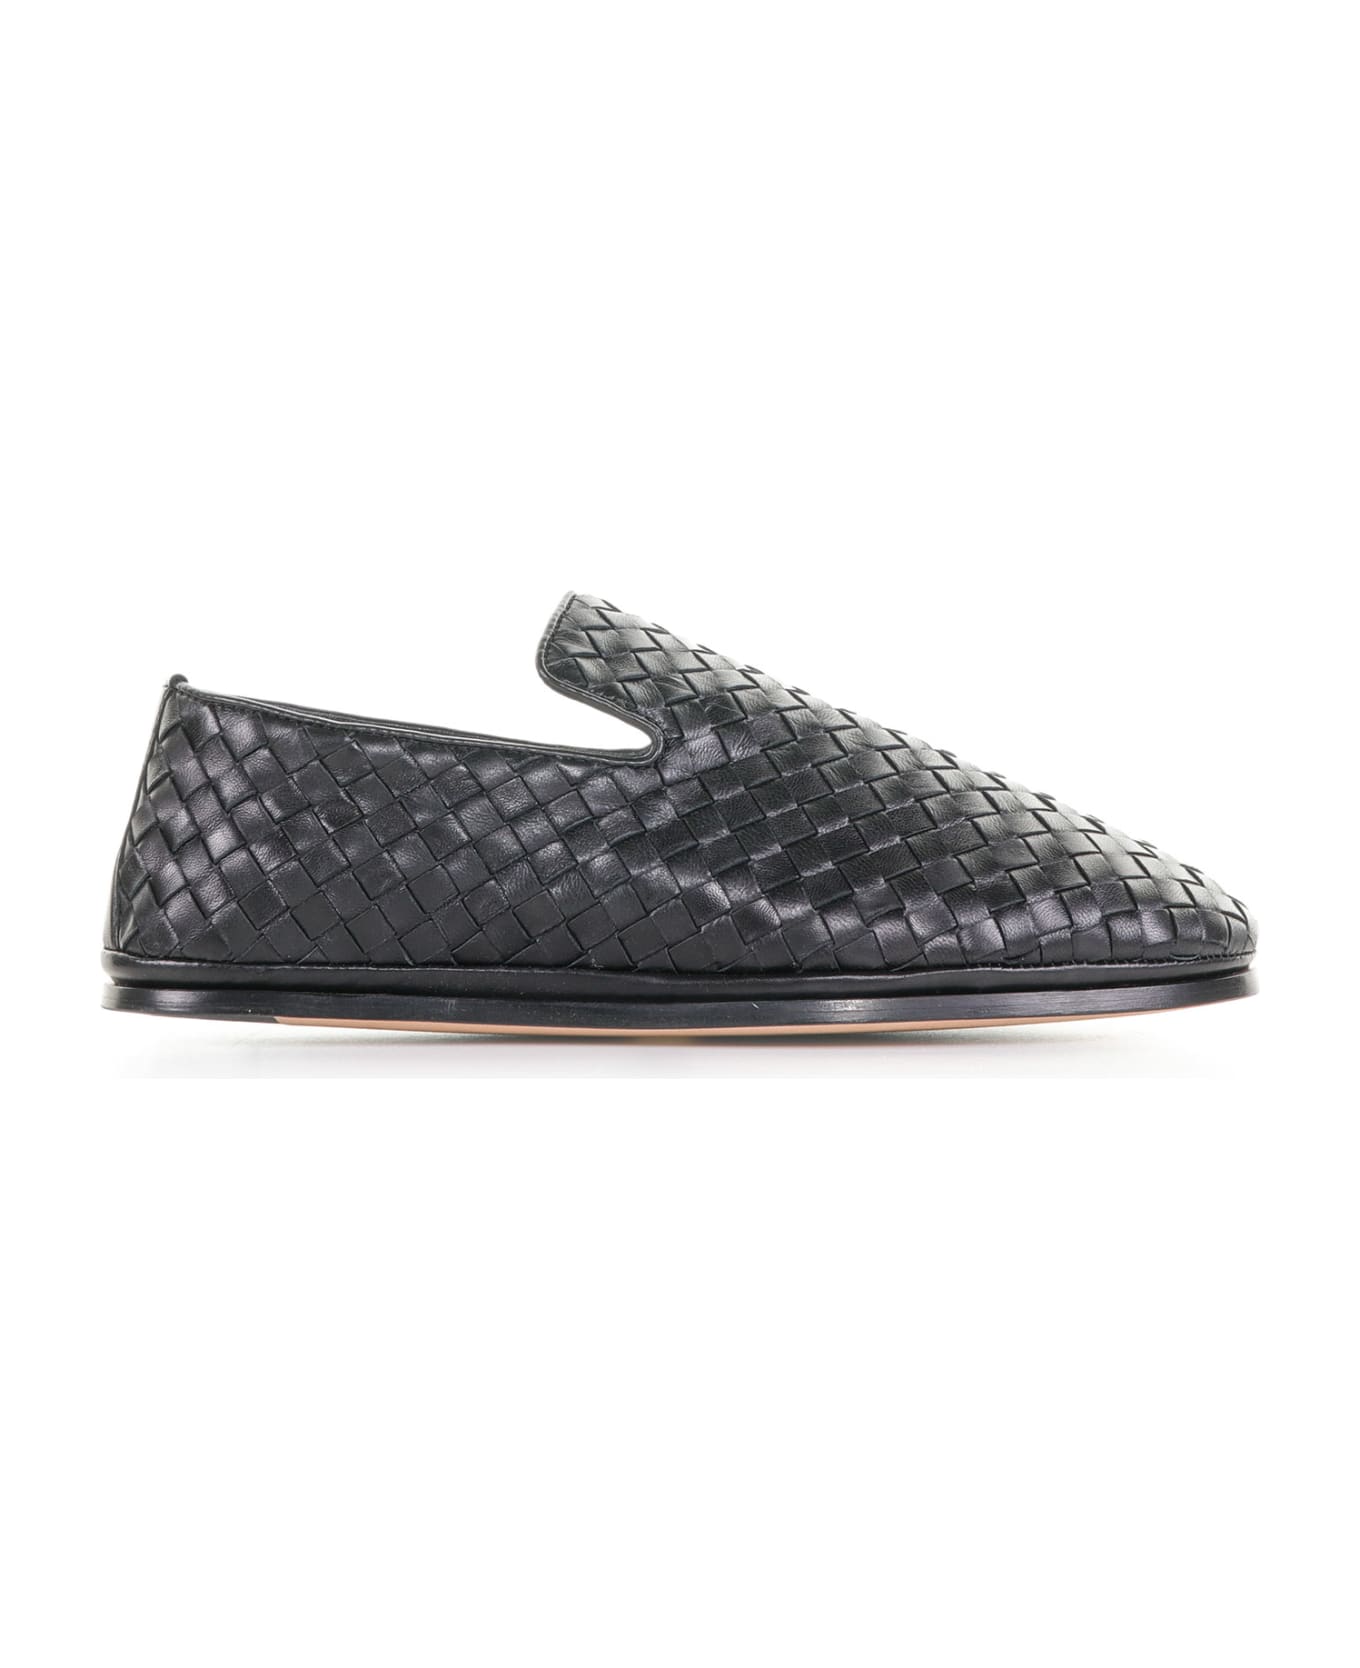 Bottega Veneta Leather Slipper With Woven Pattern - Black